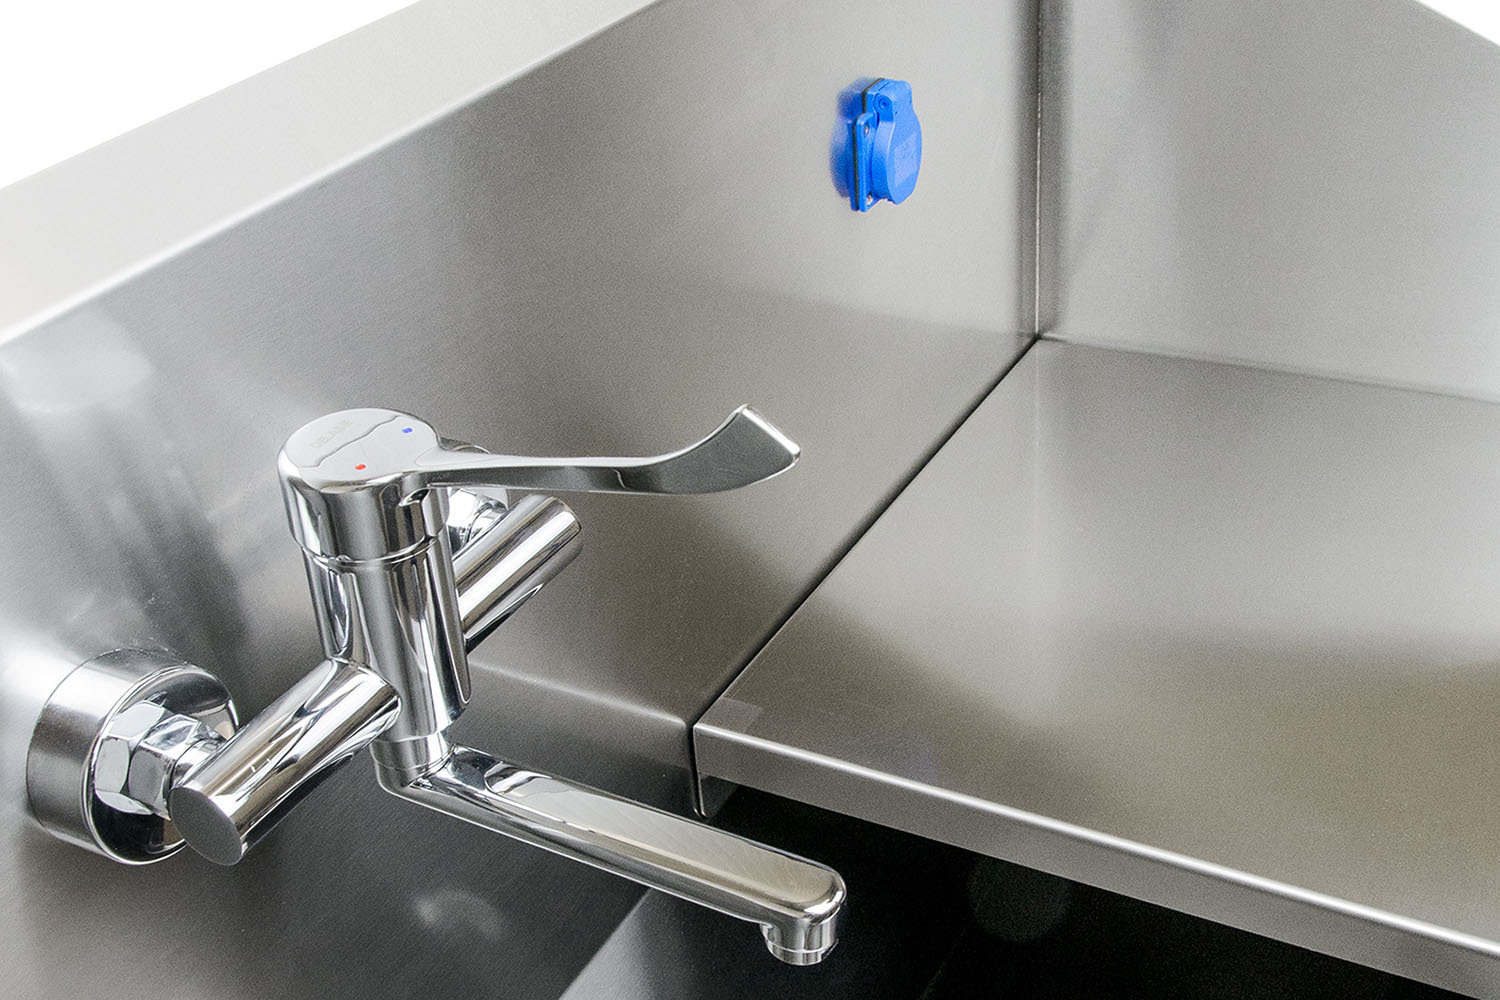 personal hygiene Stainless steel hand washing sink custom build small worktop splash walls and a waterproof plug socket Boons FIS